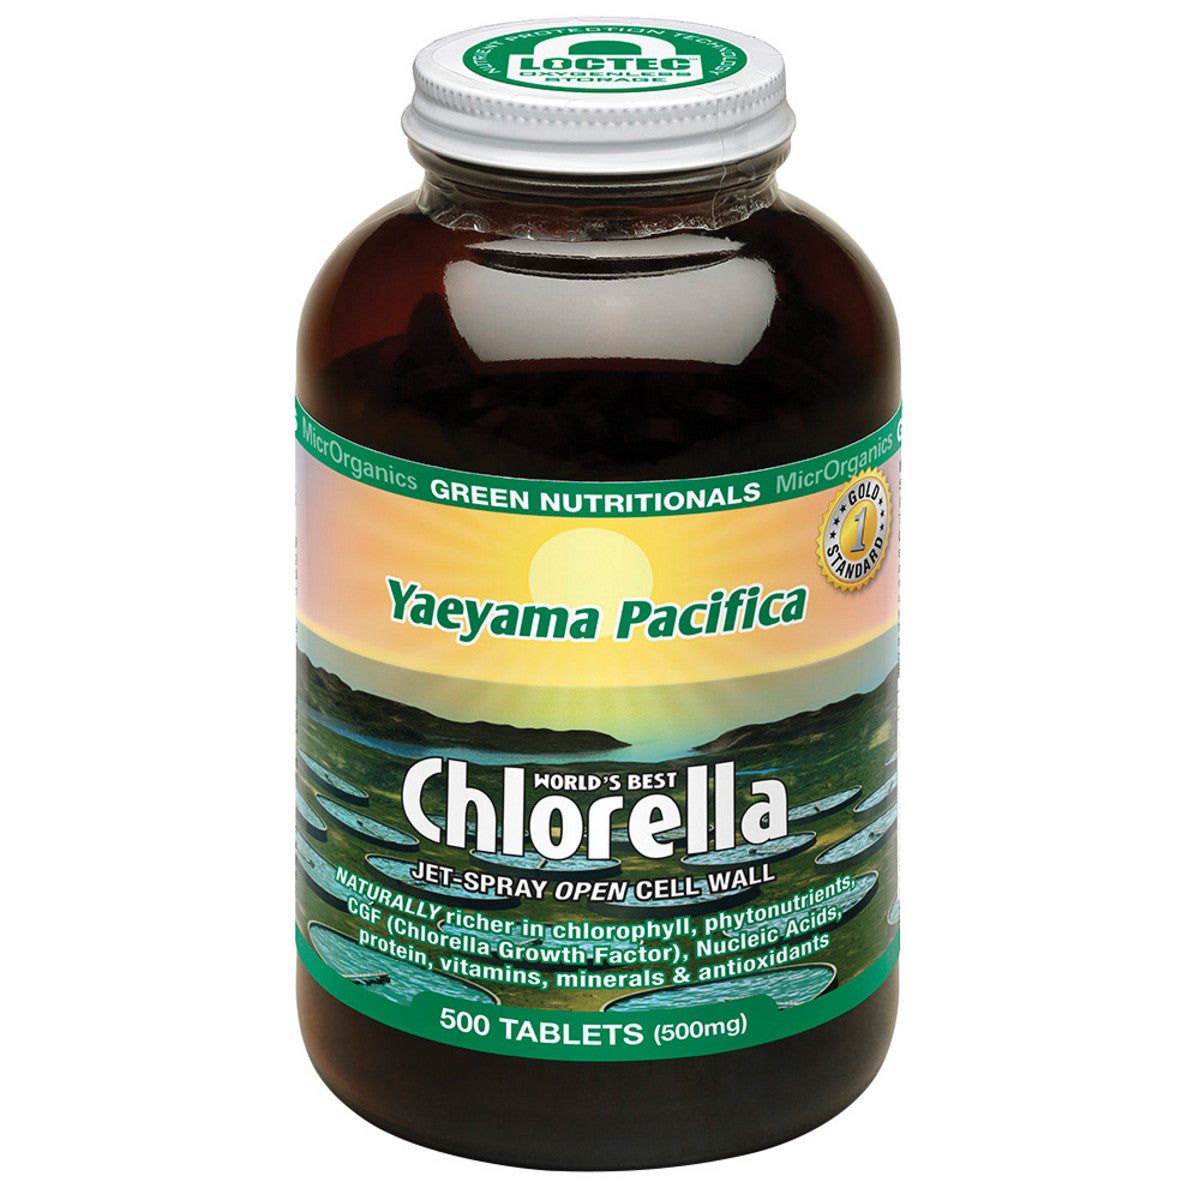 Green Nutritionals - Yaeyama Pacifica Chlorella